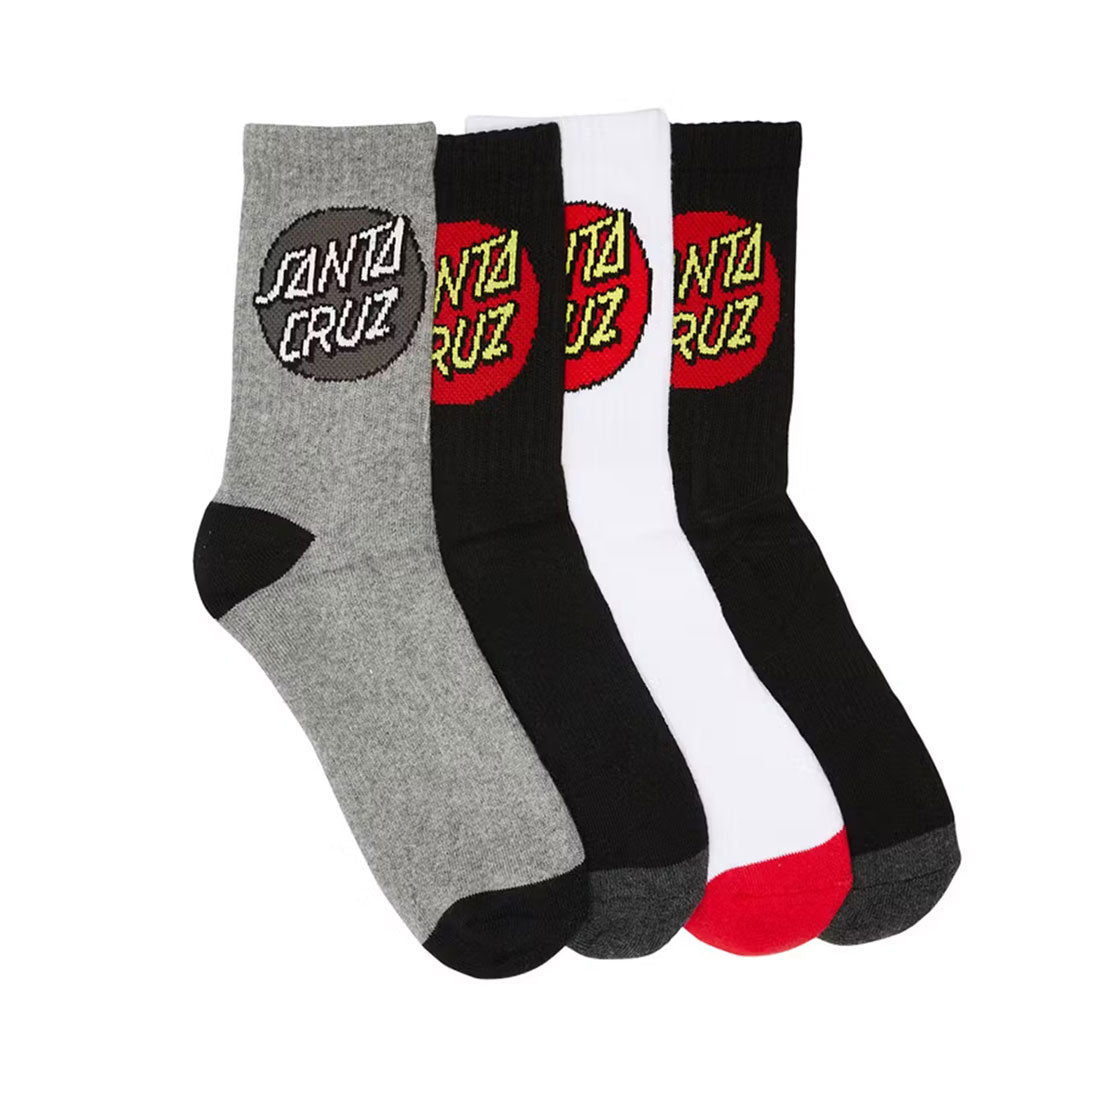 Santa Cruz Mens Crew Socks 4pk - Classic Dot Apparel Socks